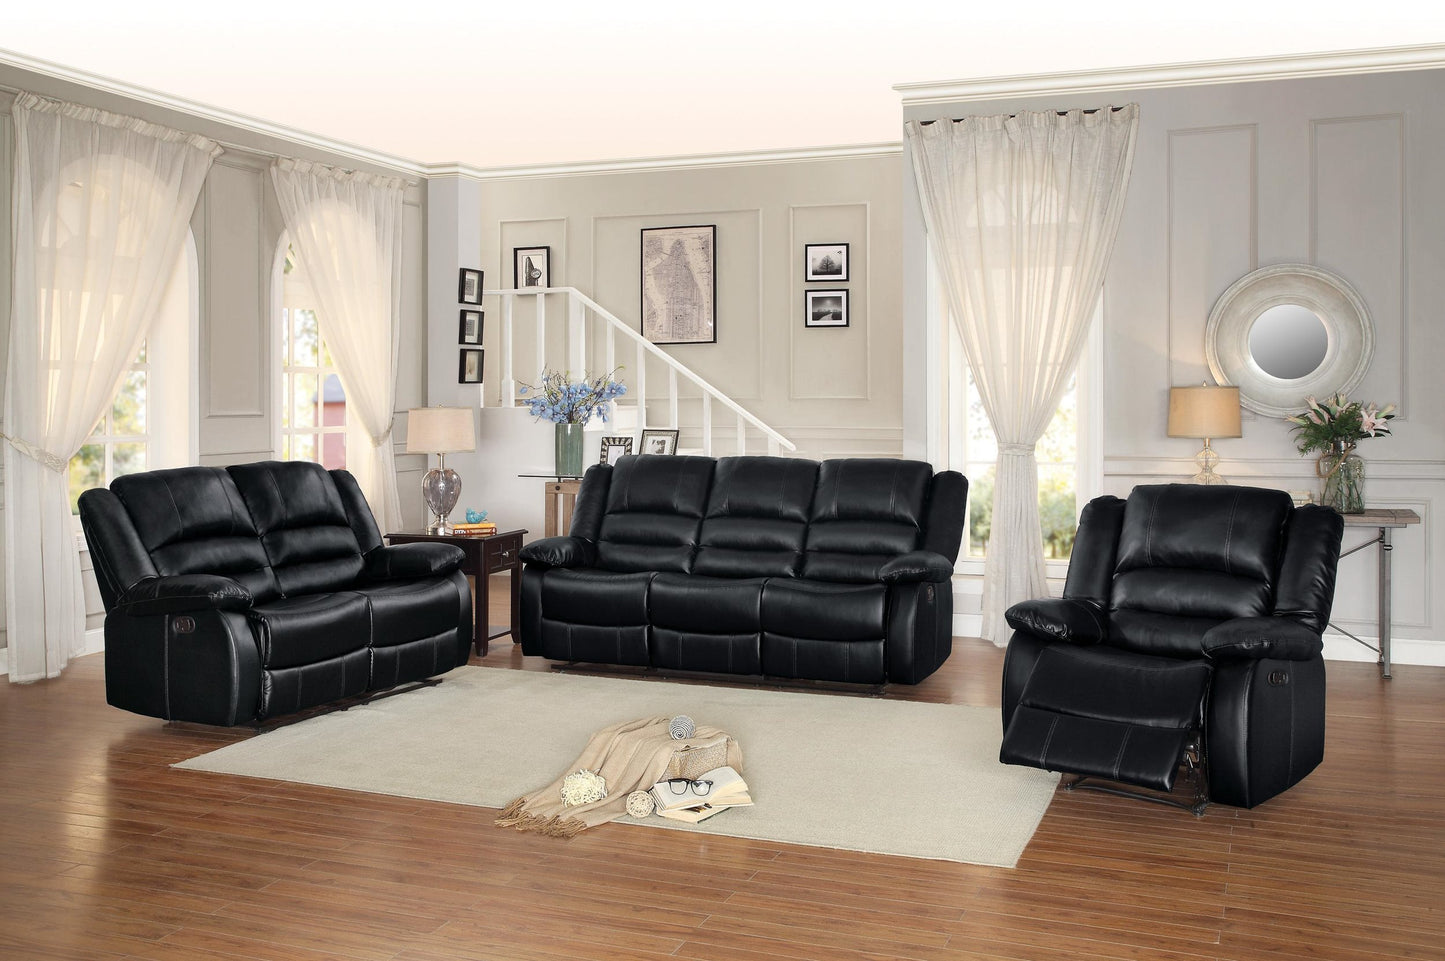 Homelegance Jarita Double Reclining Sofa in Black Leather